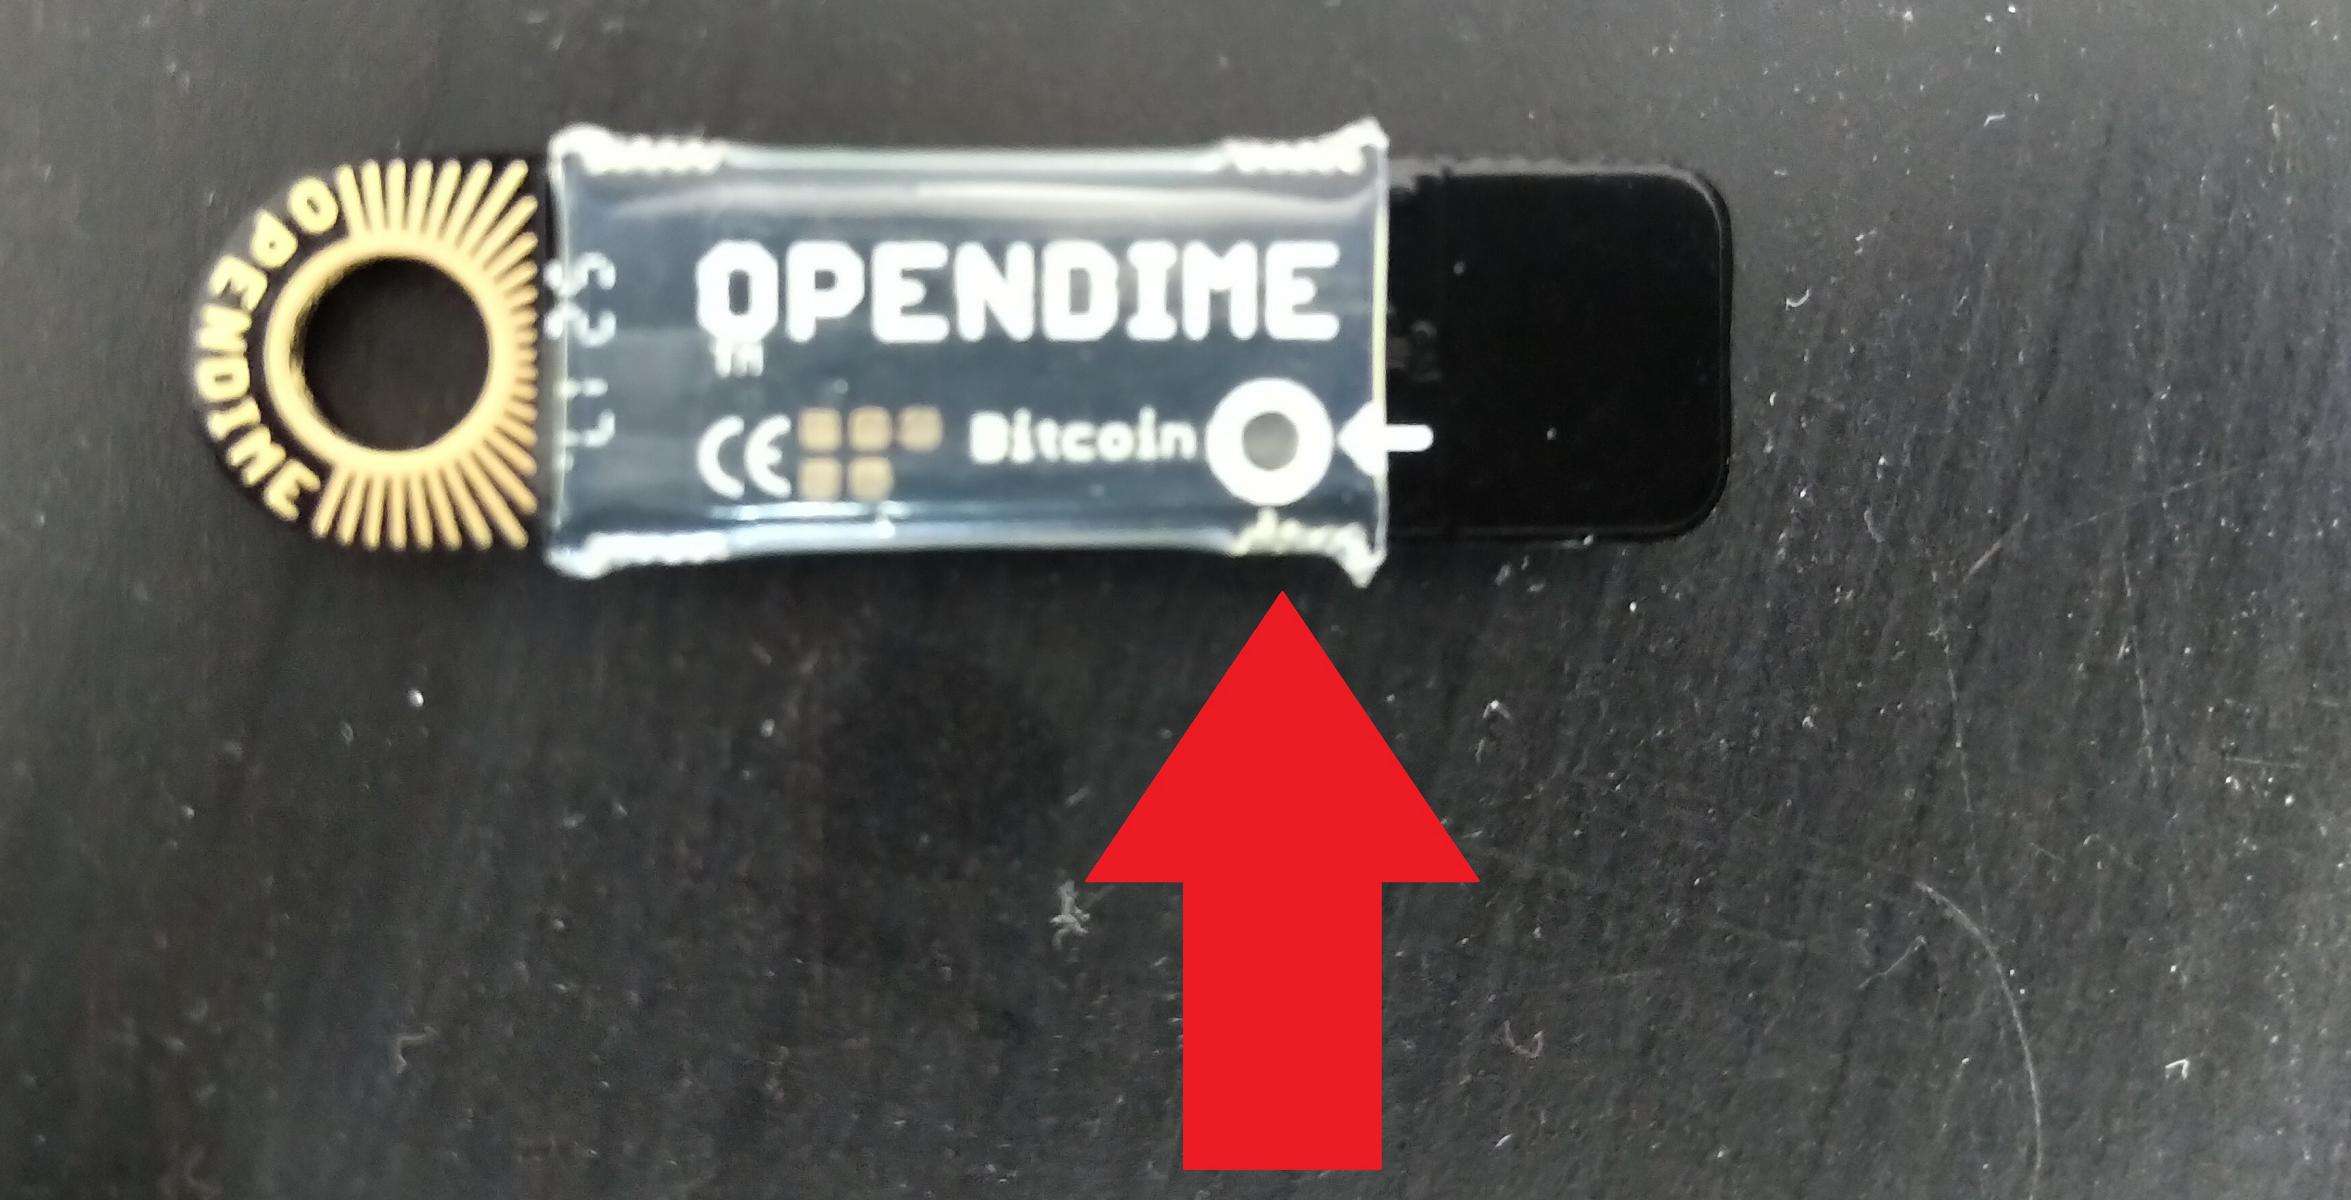 Opendime Bitcoin Credit Stick Destroy Button